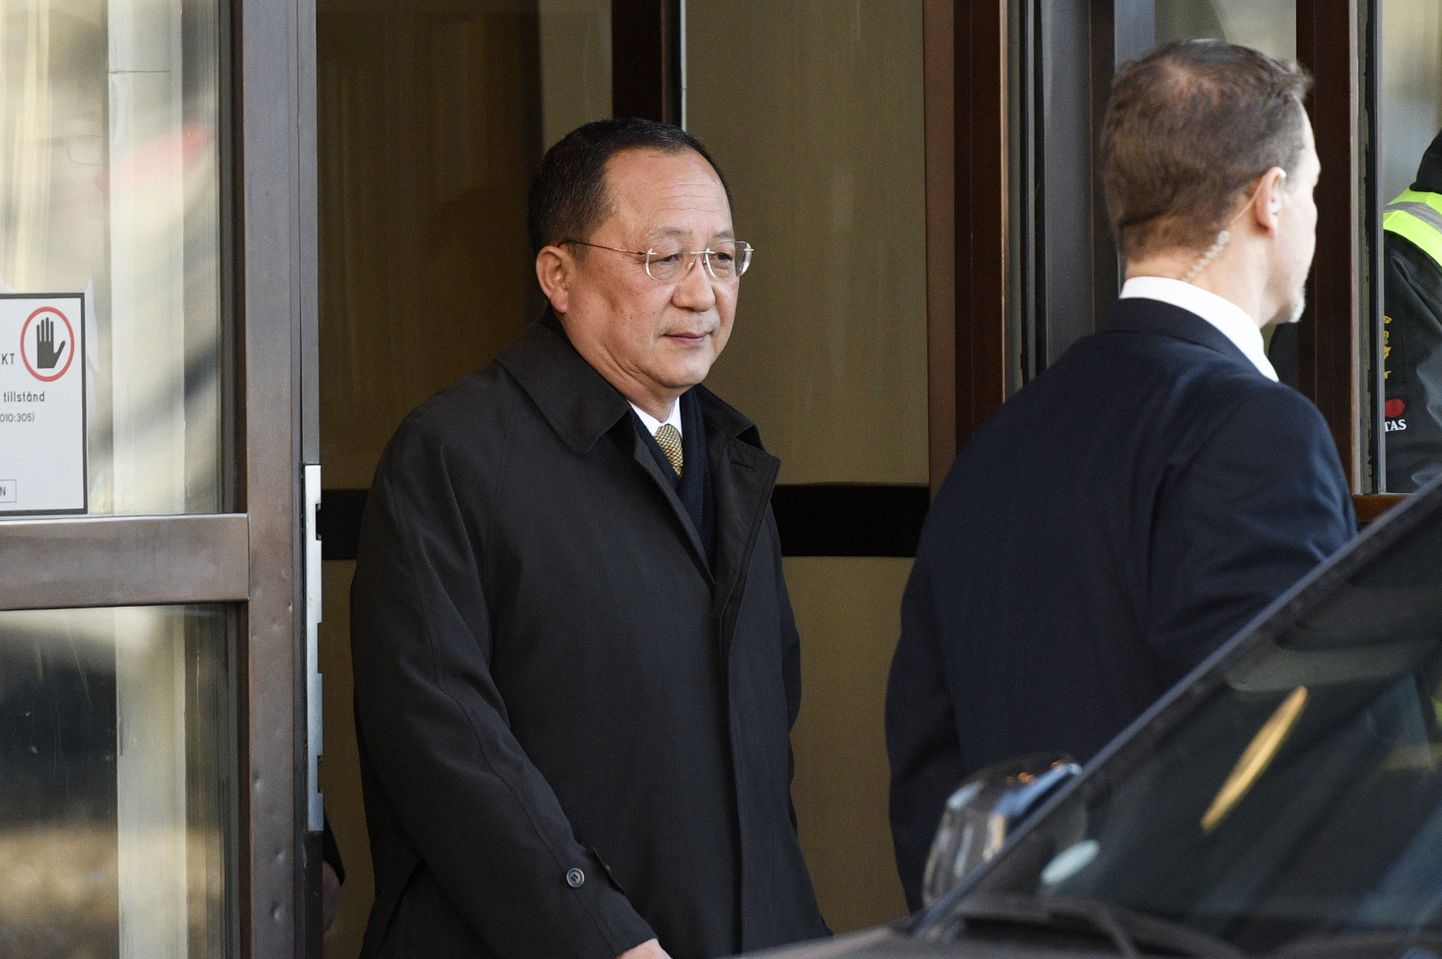 Põhja-Korea välisminister Ri Yong Ho Stockholmis.